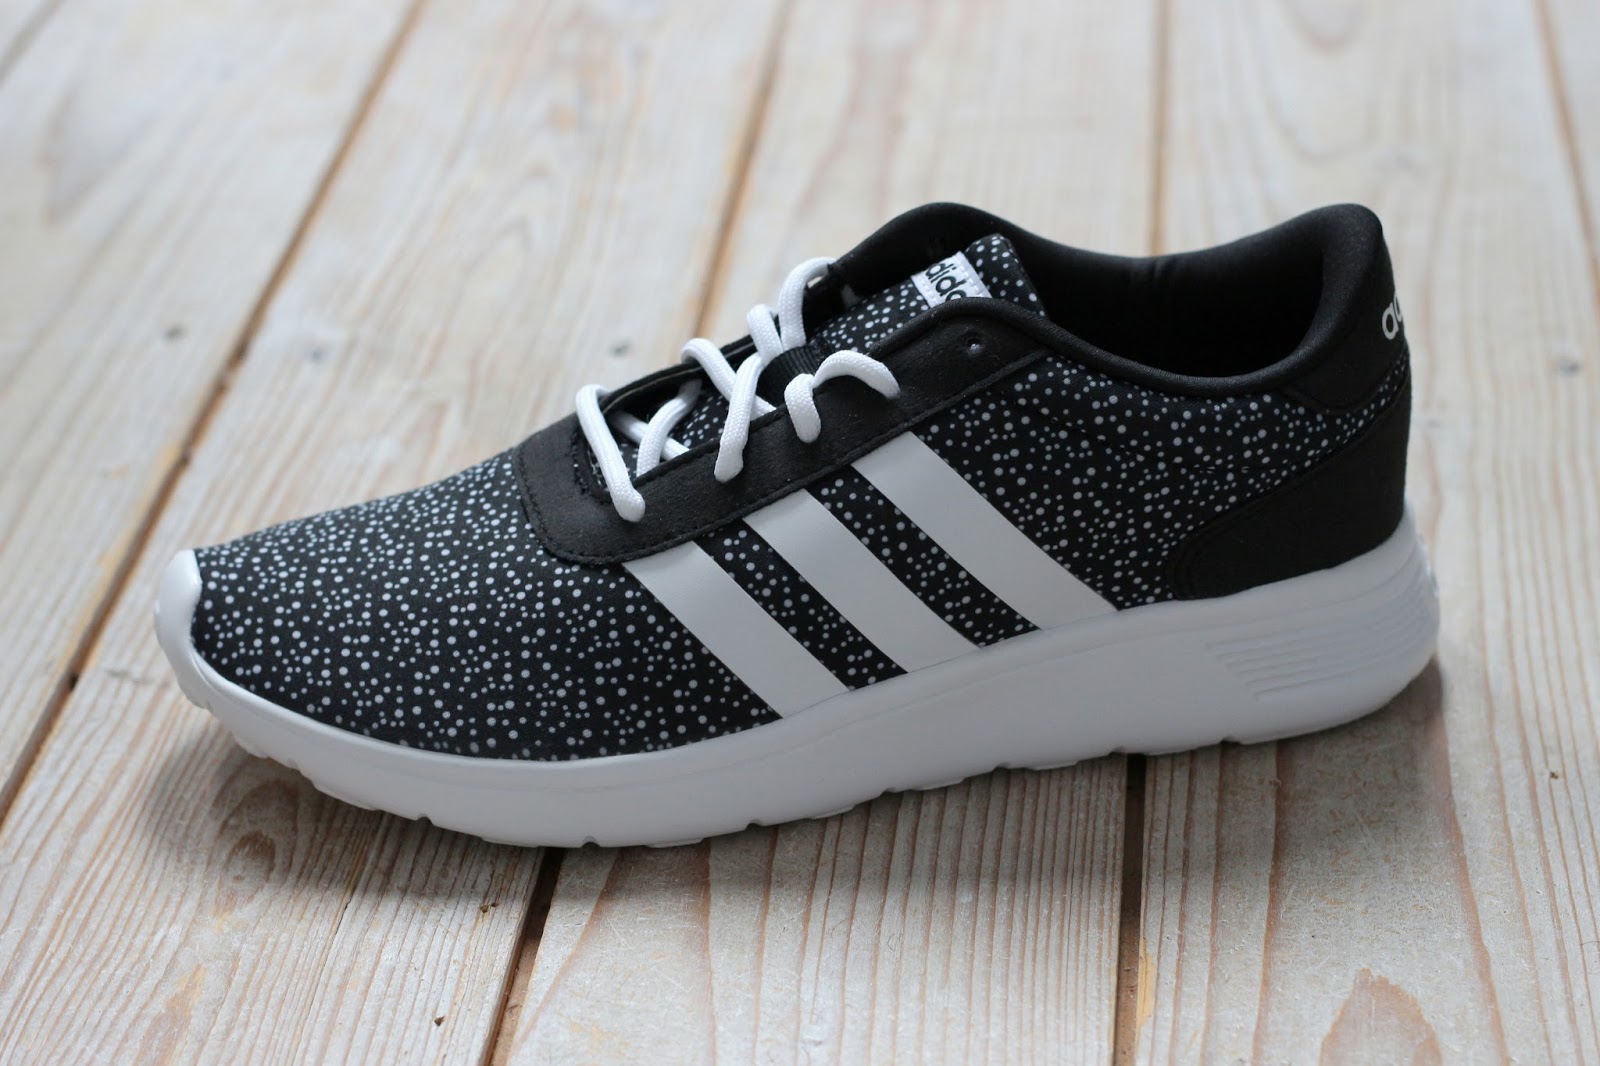 Adidas NEO lite racer zwart wit stippen sneakers sportschoenen